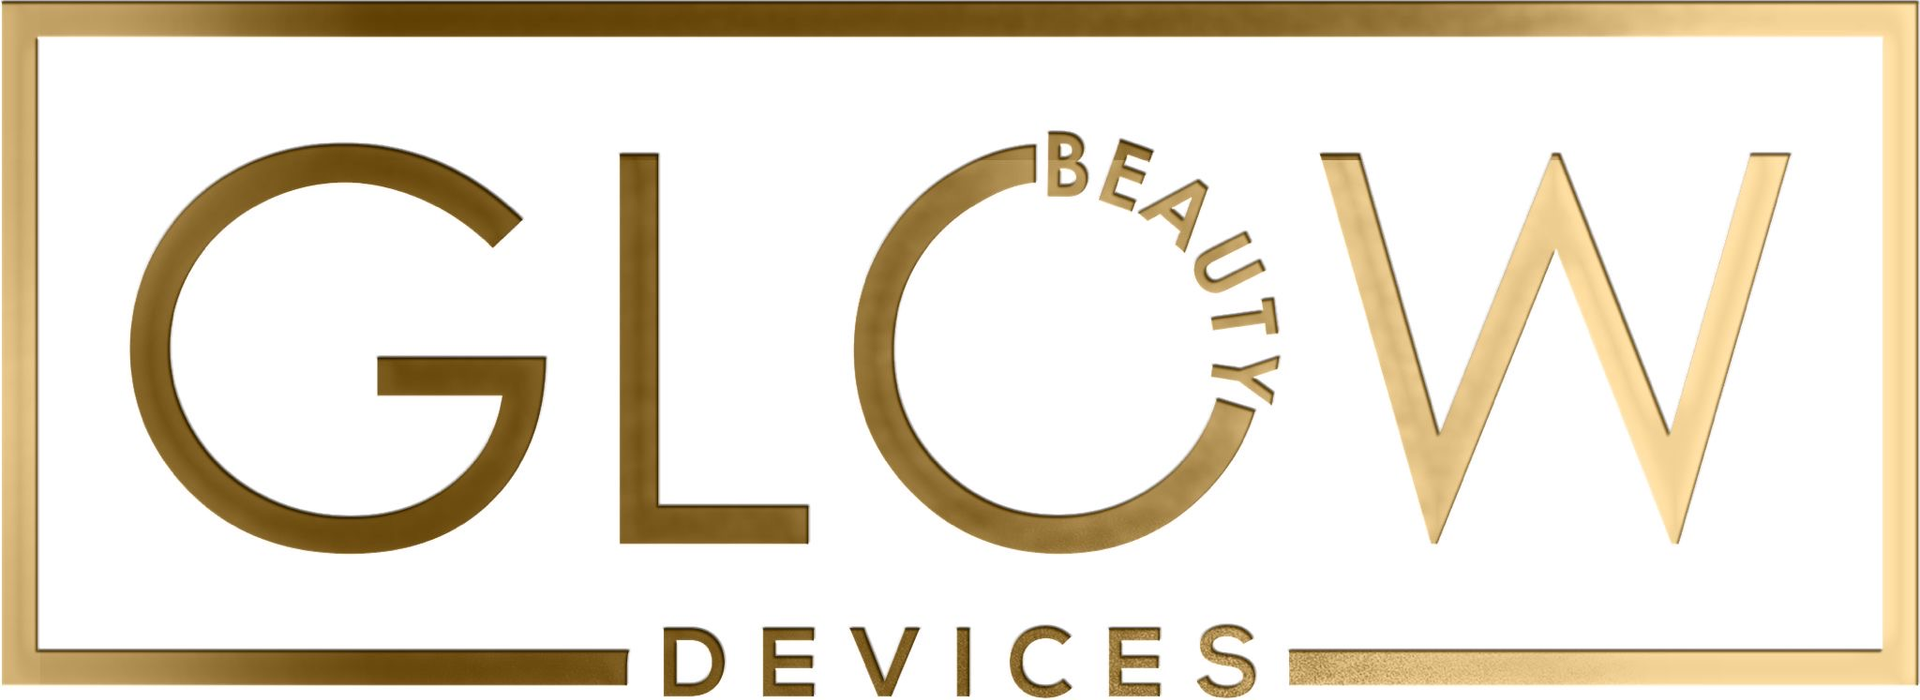 glow beauty devices -logo